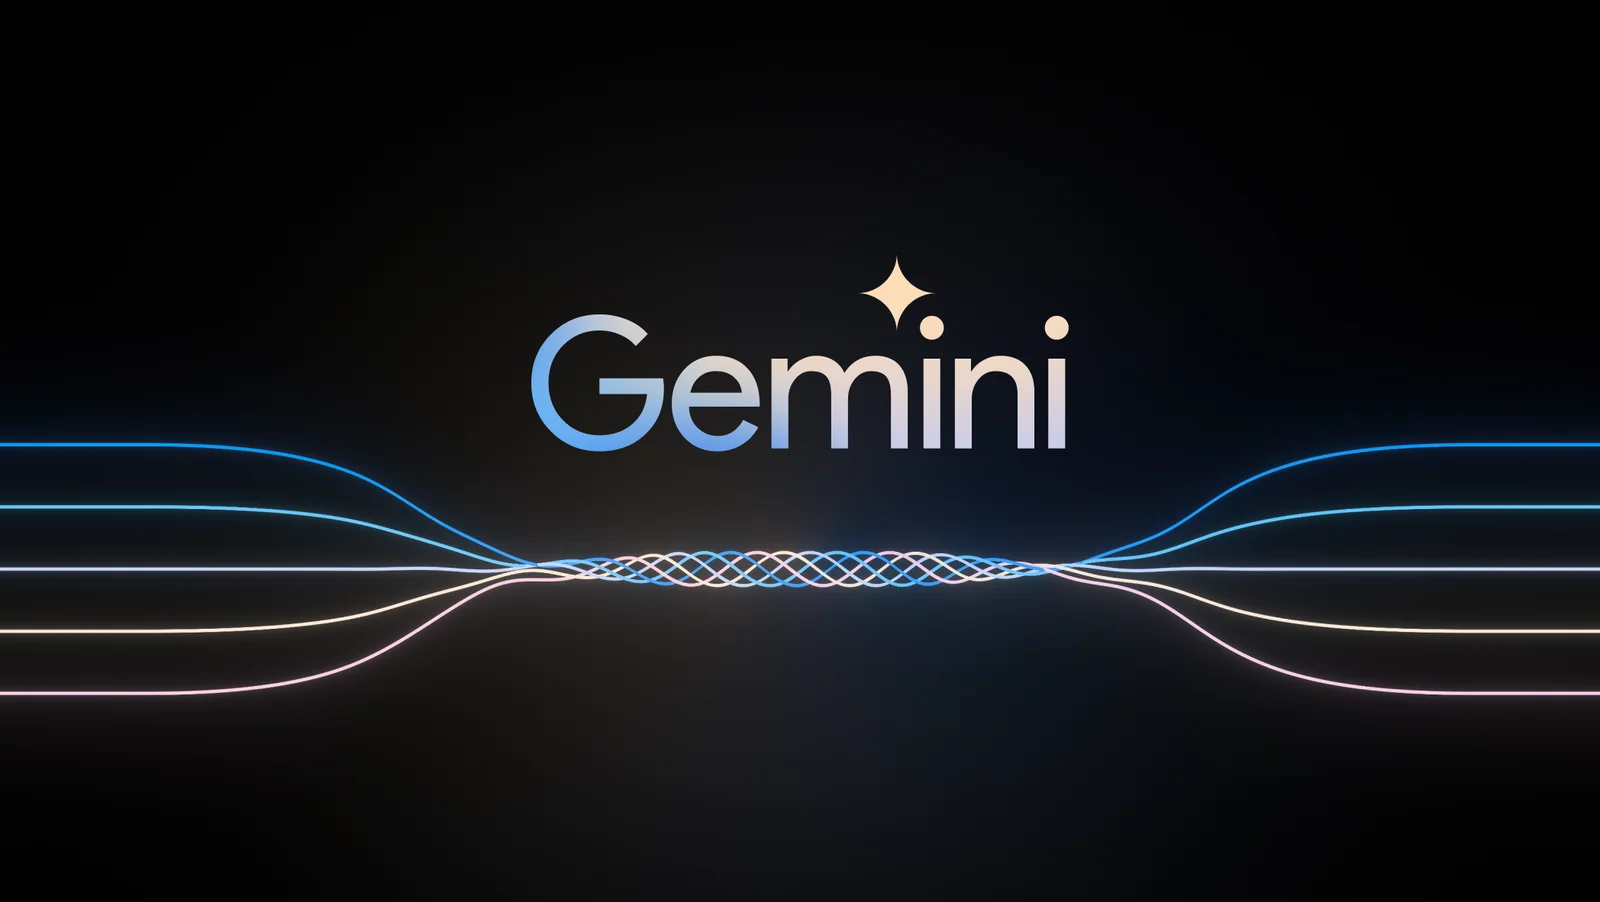 Google's Gemini AI puts OpenAI's GPT-4 on notice